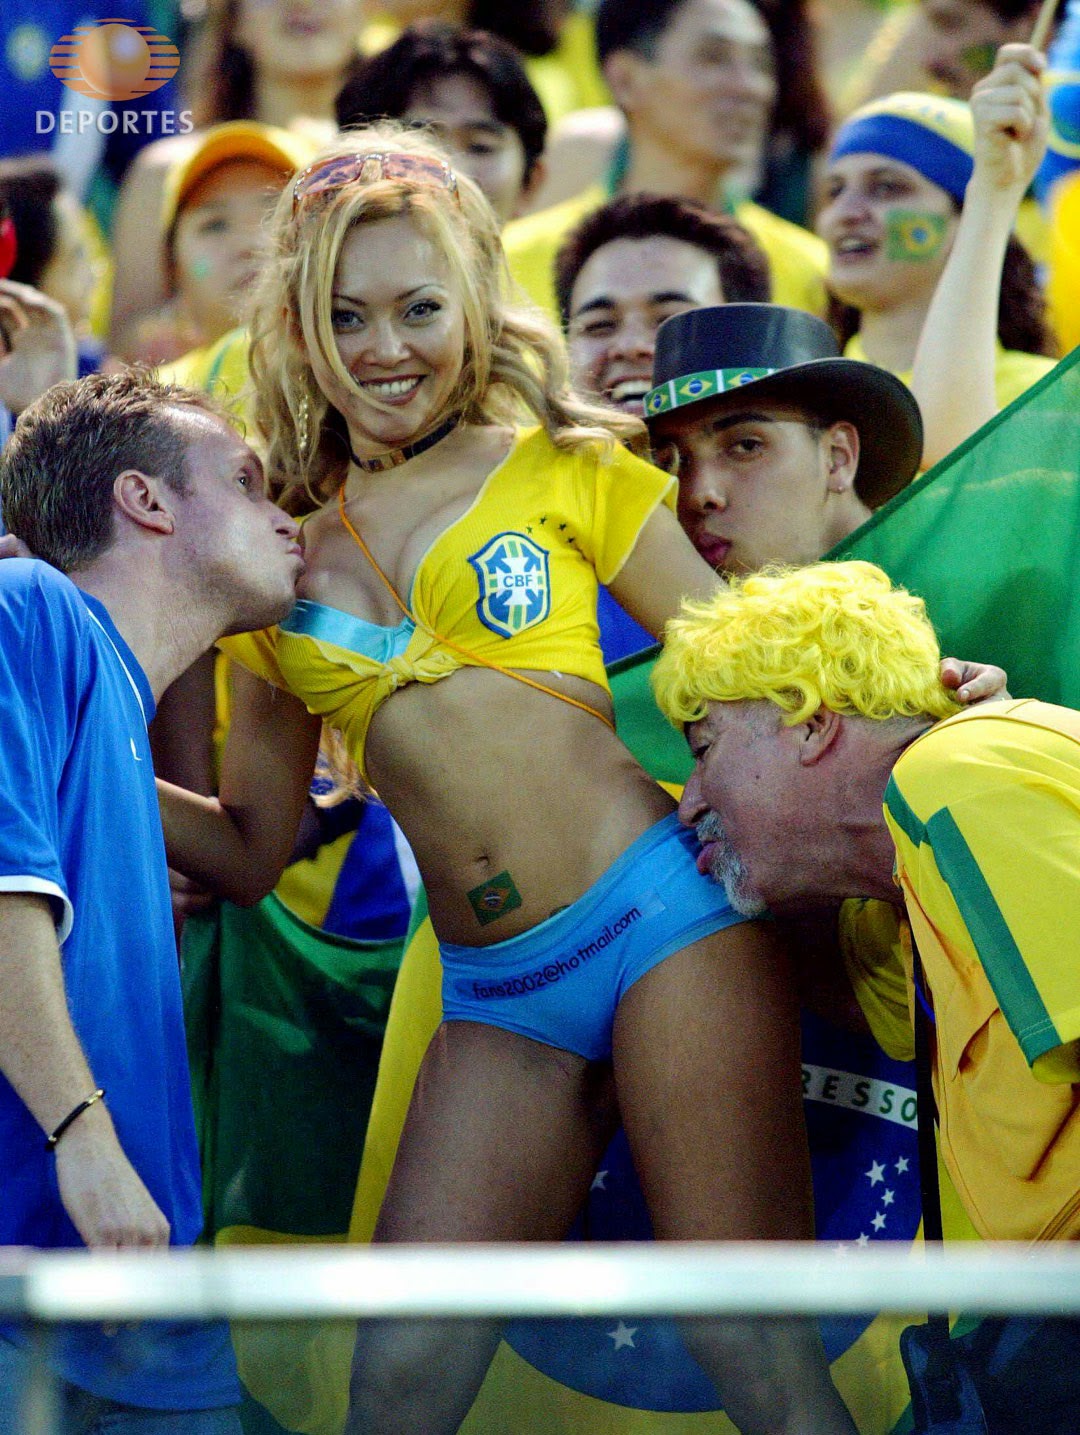 2015 Mundial Brasil 2014 World Cup: mujeres más hermosas, lindas, bellas. Sexy girls, chicas guapas. Aficionadas bonitas Brasil selecao brasileira garota